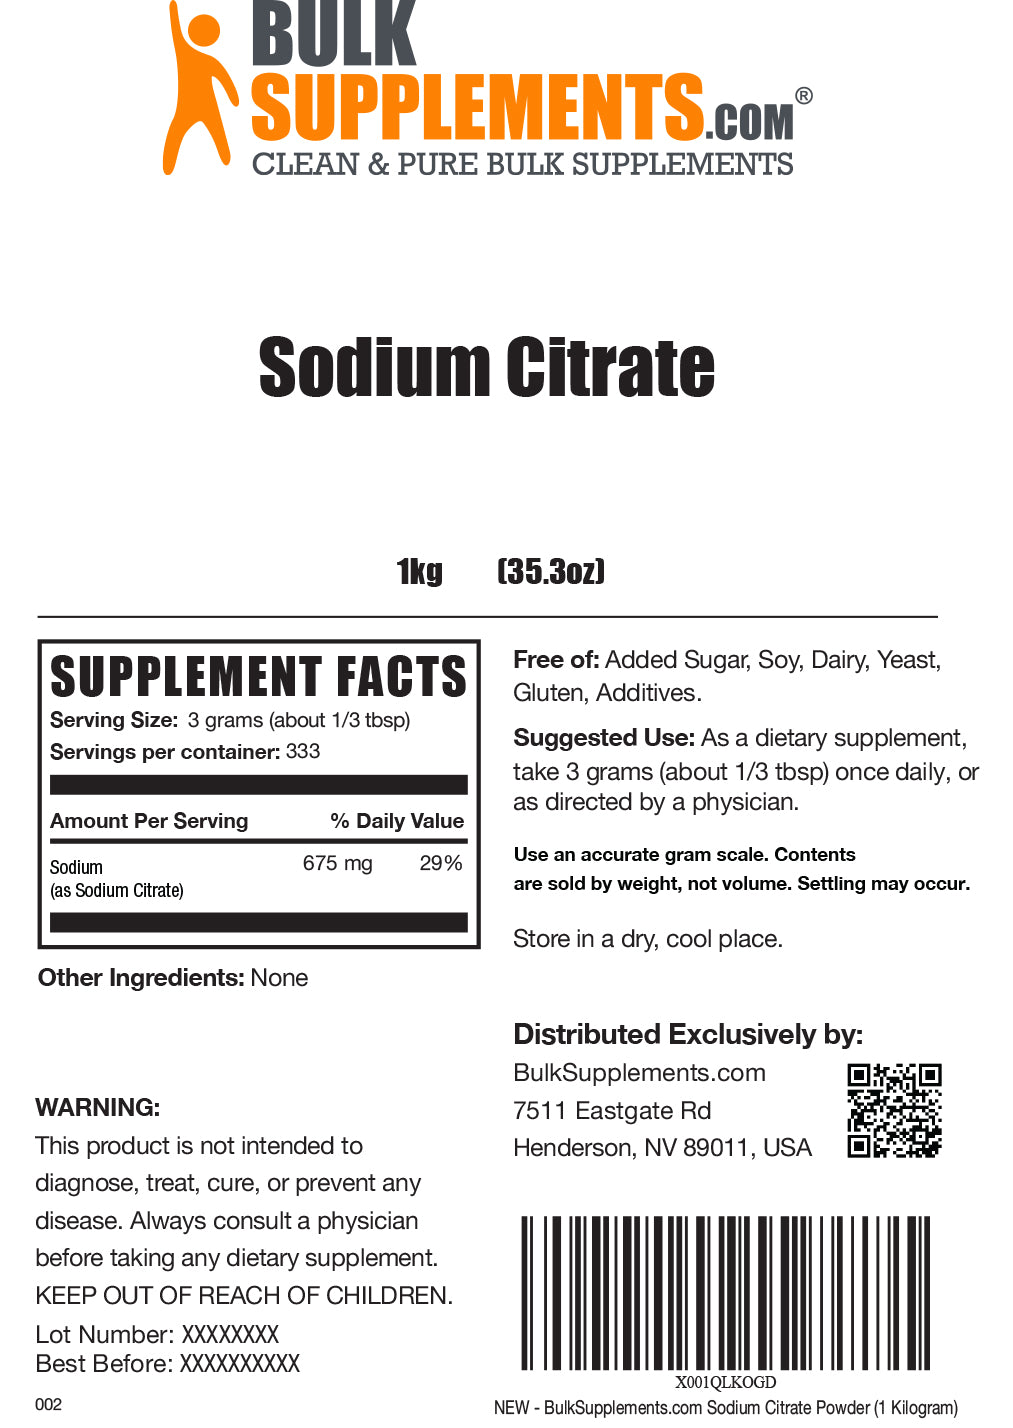 Sodium citrate powder label 1kg